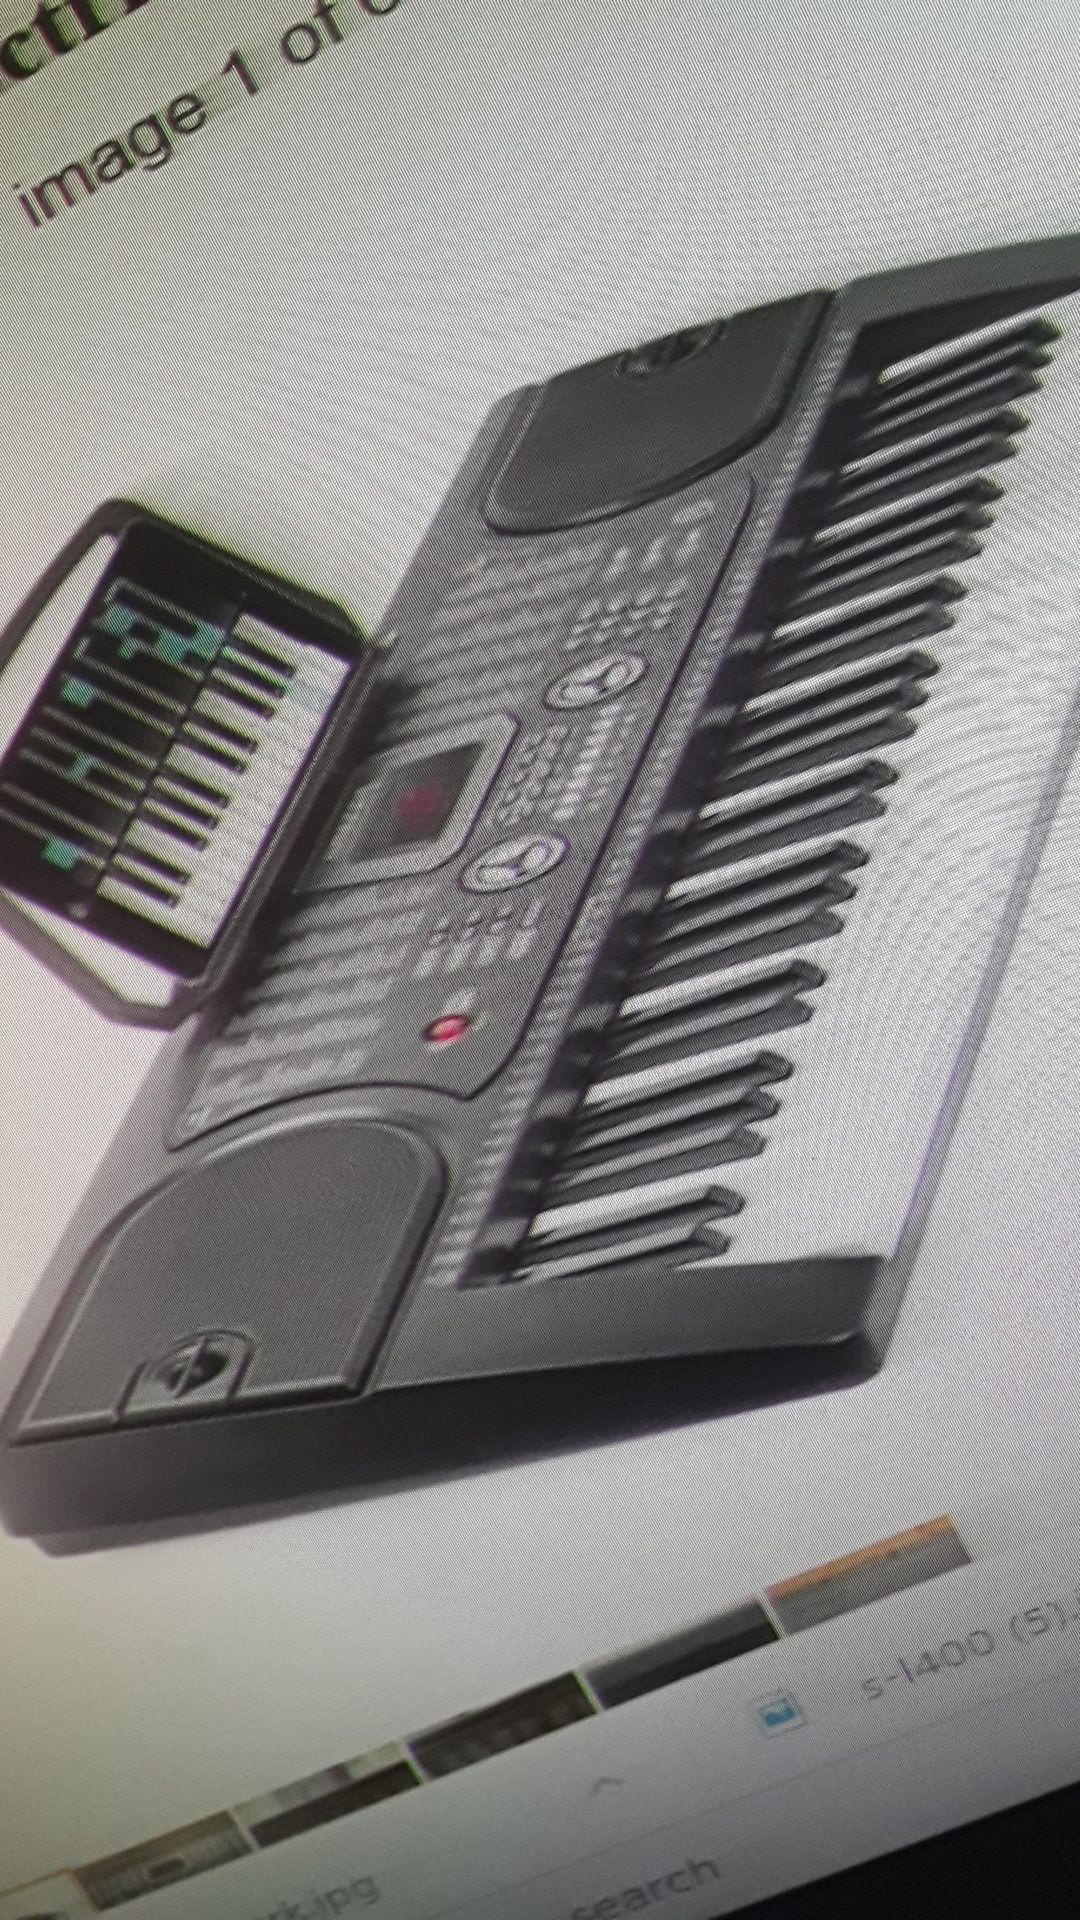 61 key electronic piano electronic organ keyboard w/ microphone